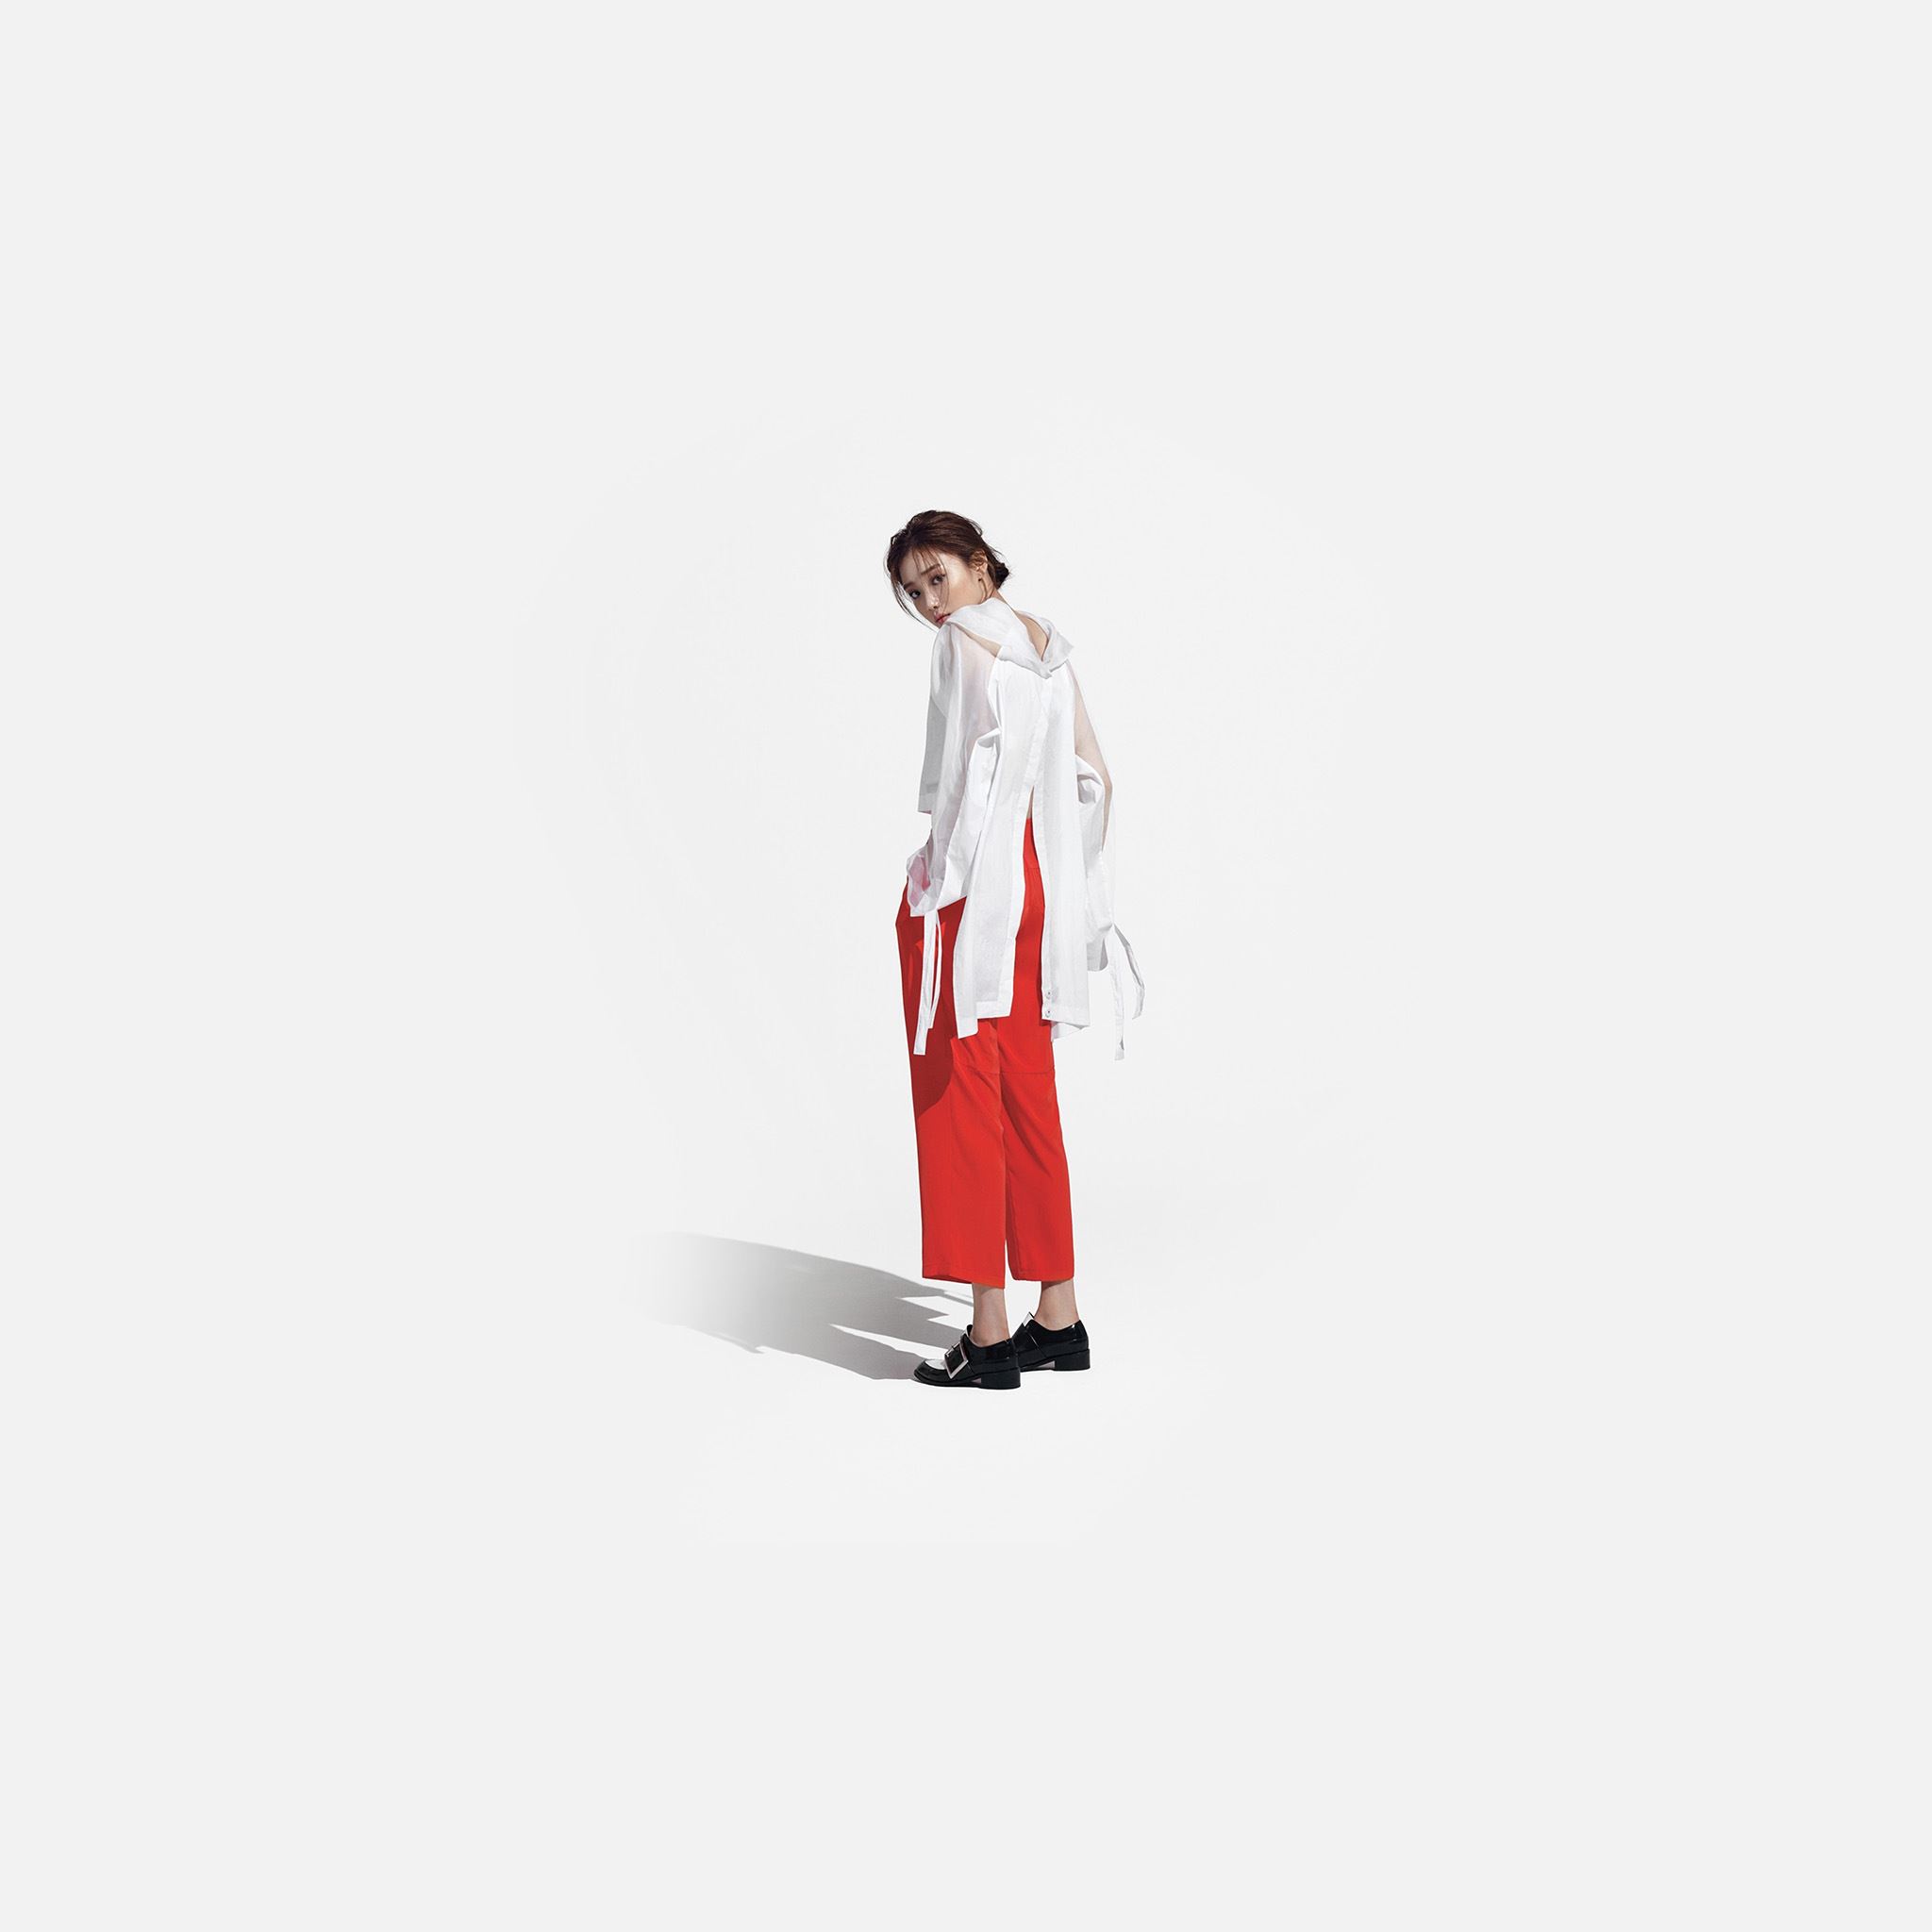 Kpop Sungkyung Model White iPad Air wallpaper 